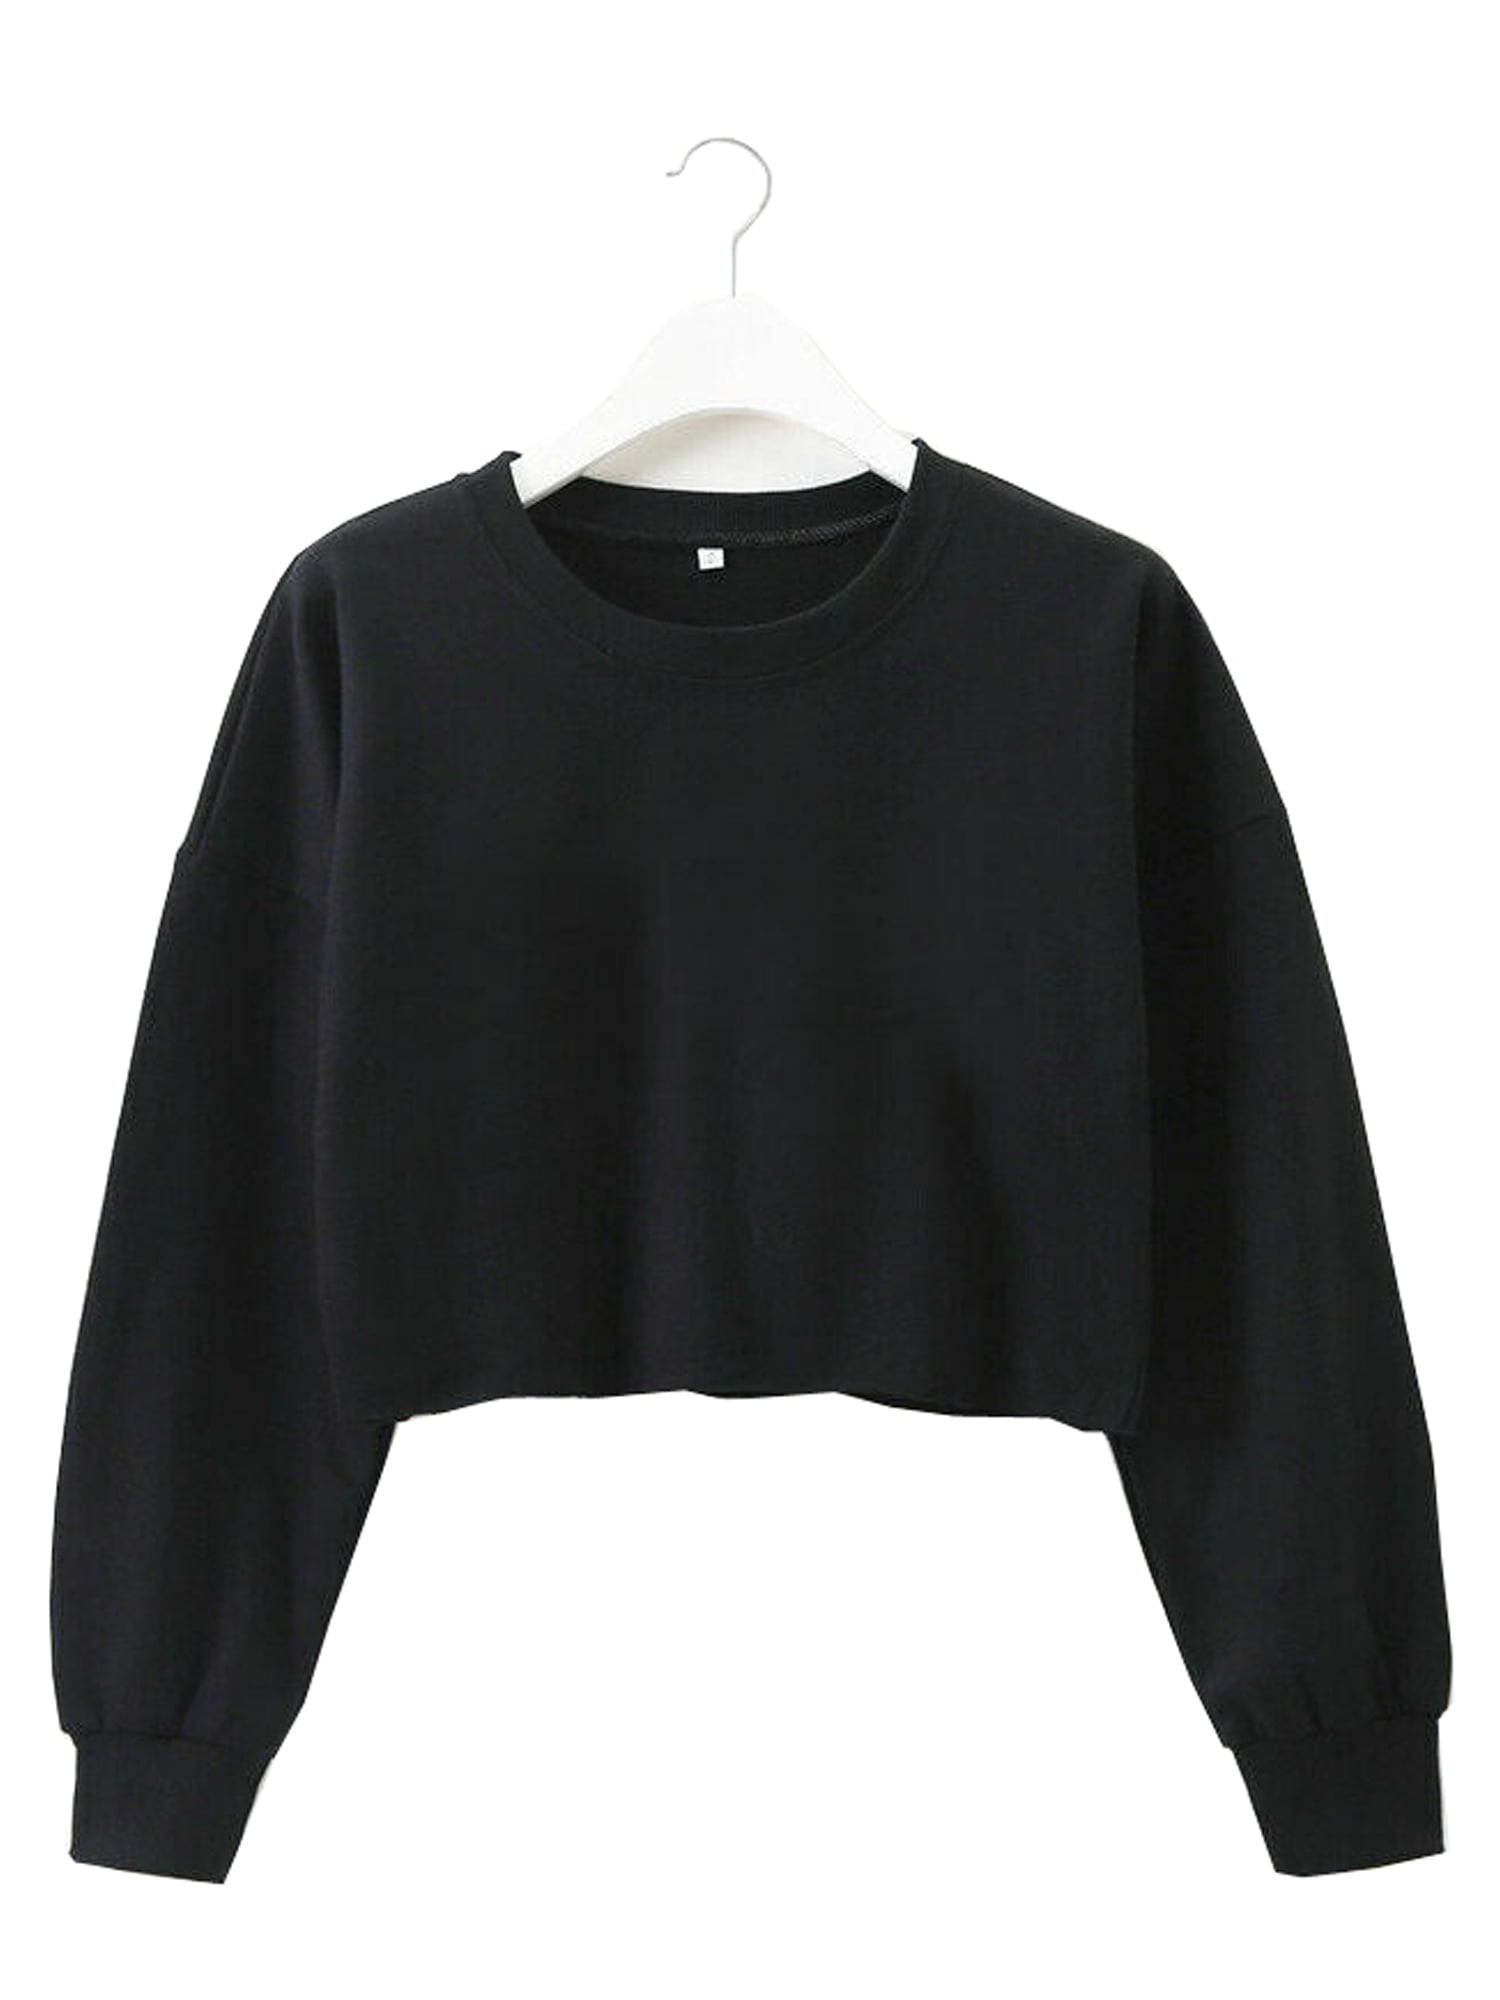 Fubotevic Women Long Sleeve Loose Crop Top Letter Print Pullover Sweatshirt